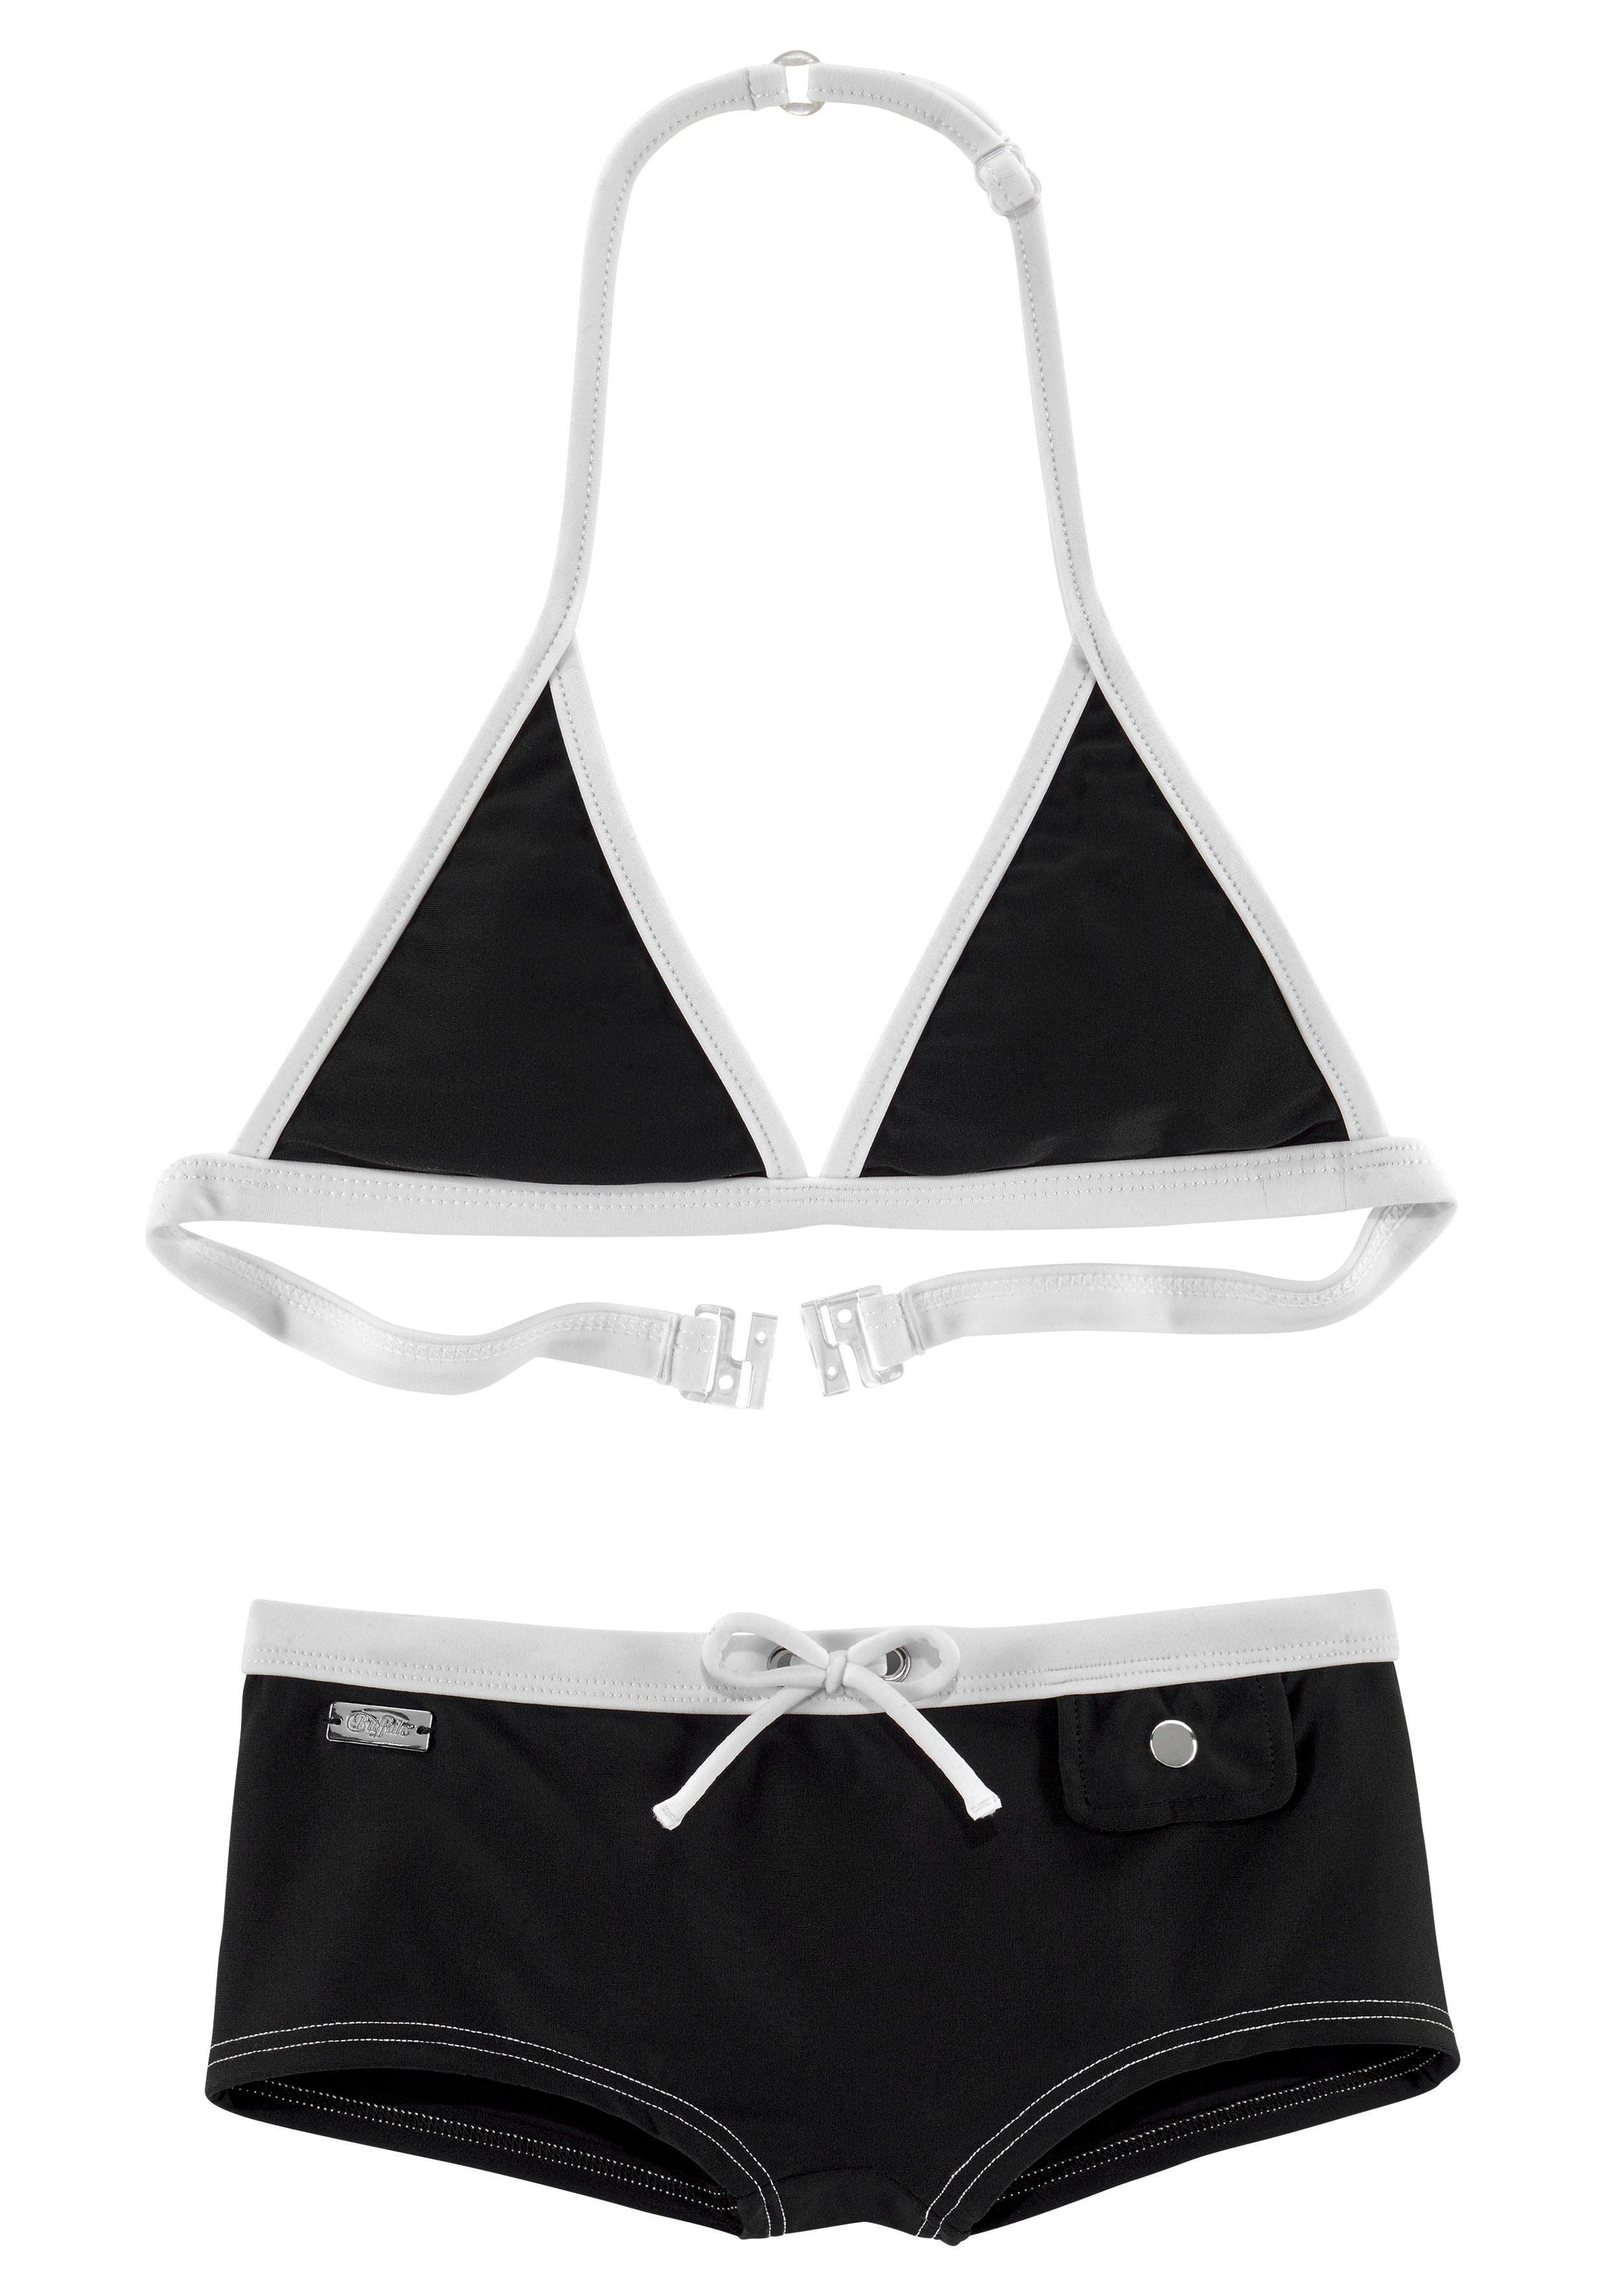 Hotpants Triangel-Bikini trendiger schwarz-weiß mit Buffalo